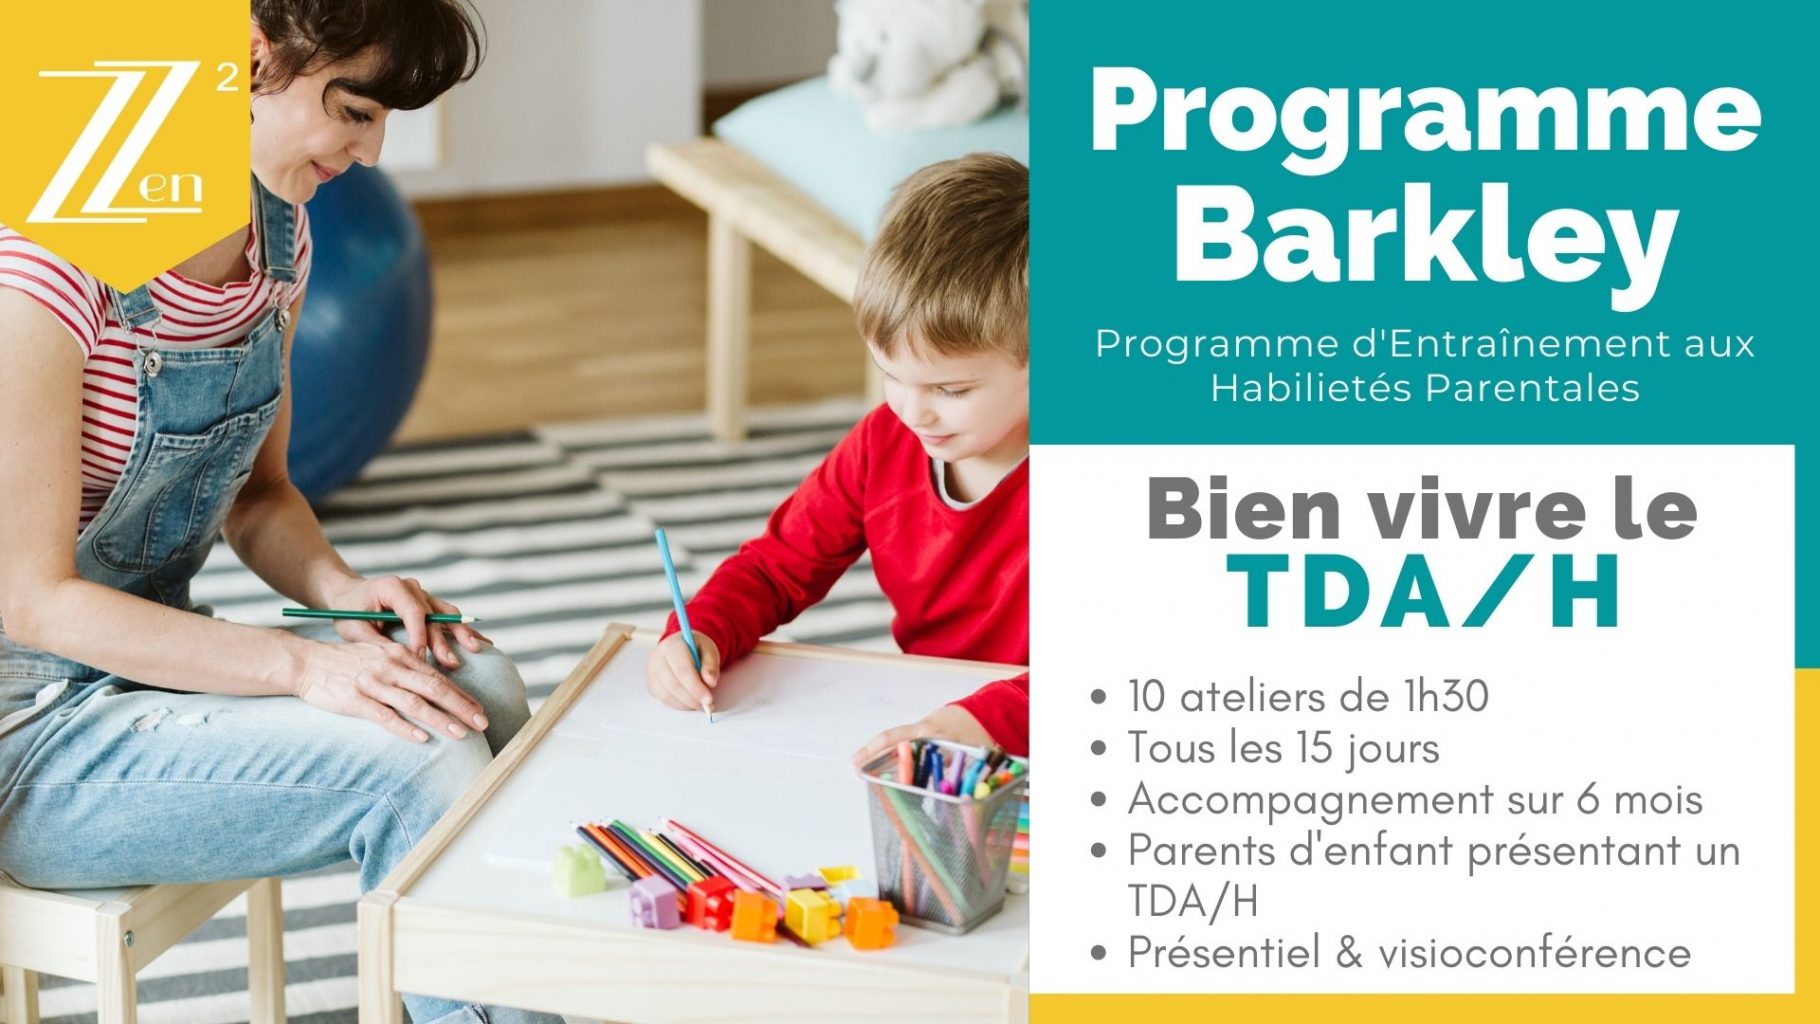 Programme Barkley - guidance parentale